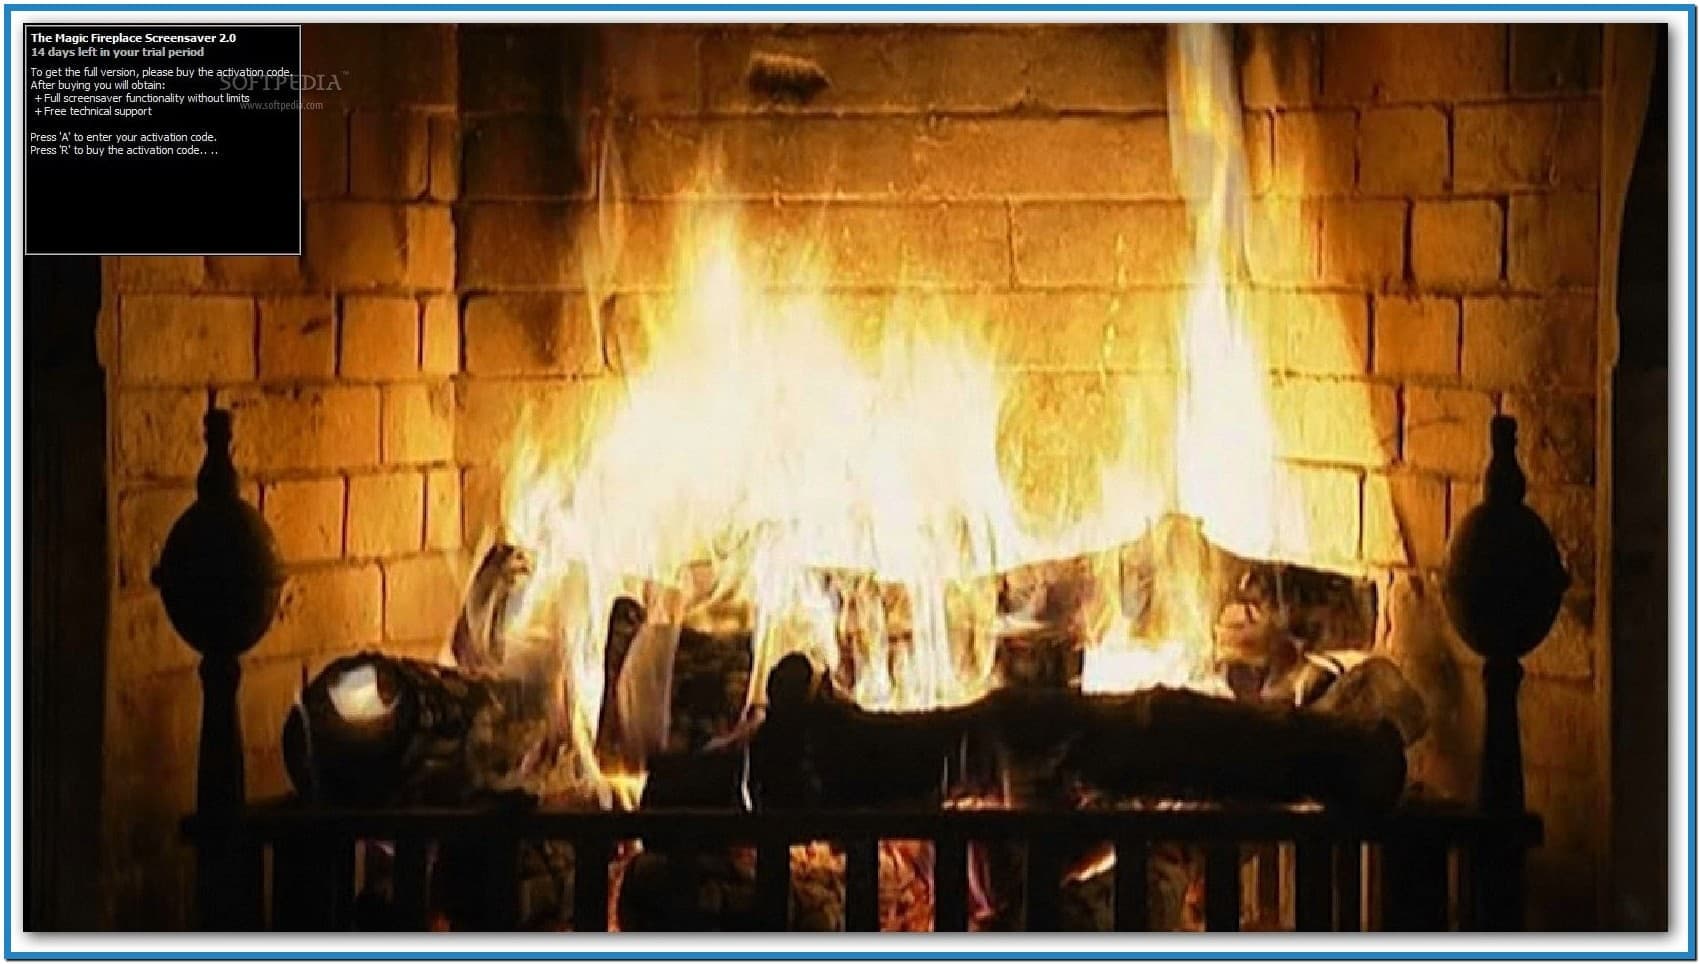 crackling fireplace screensaver free